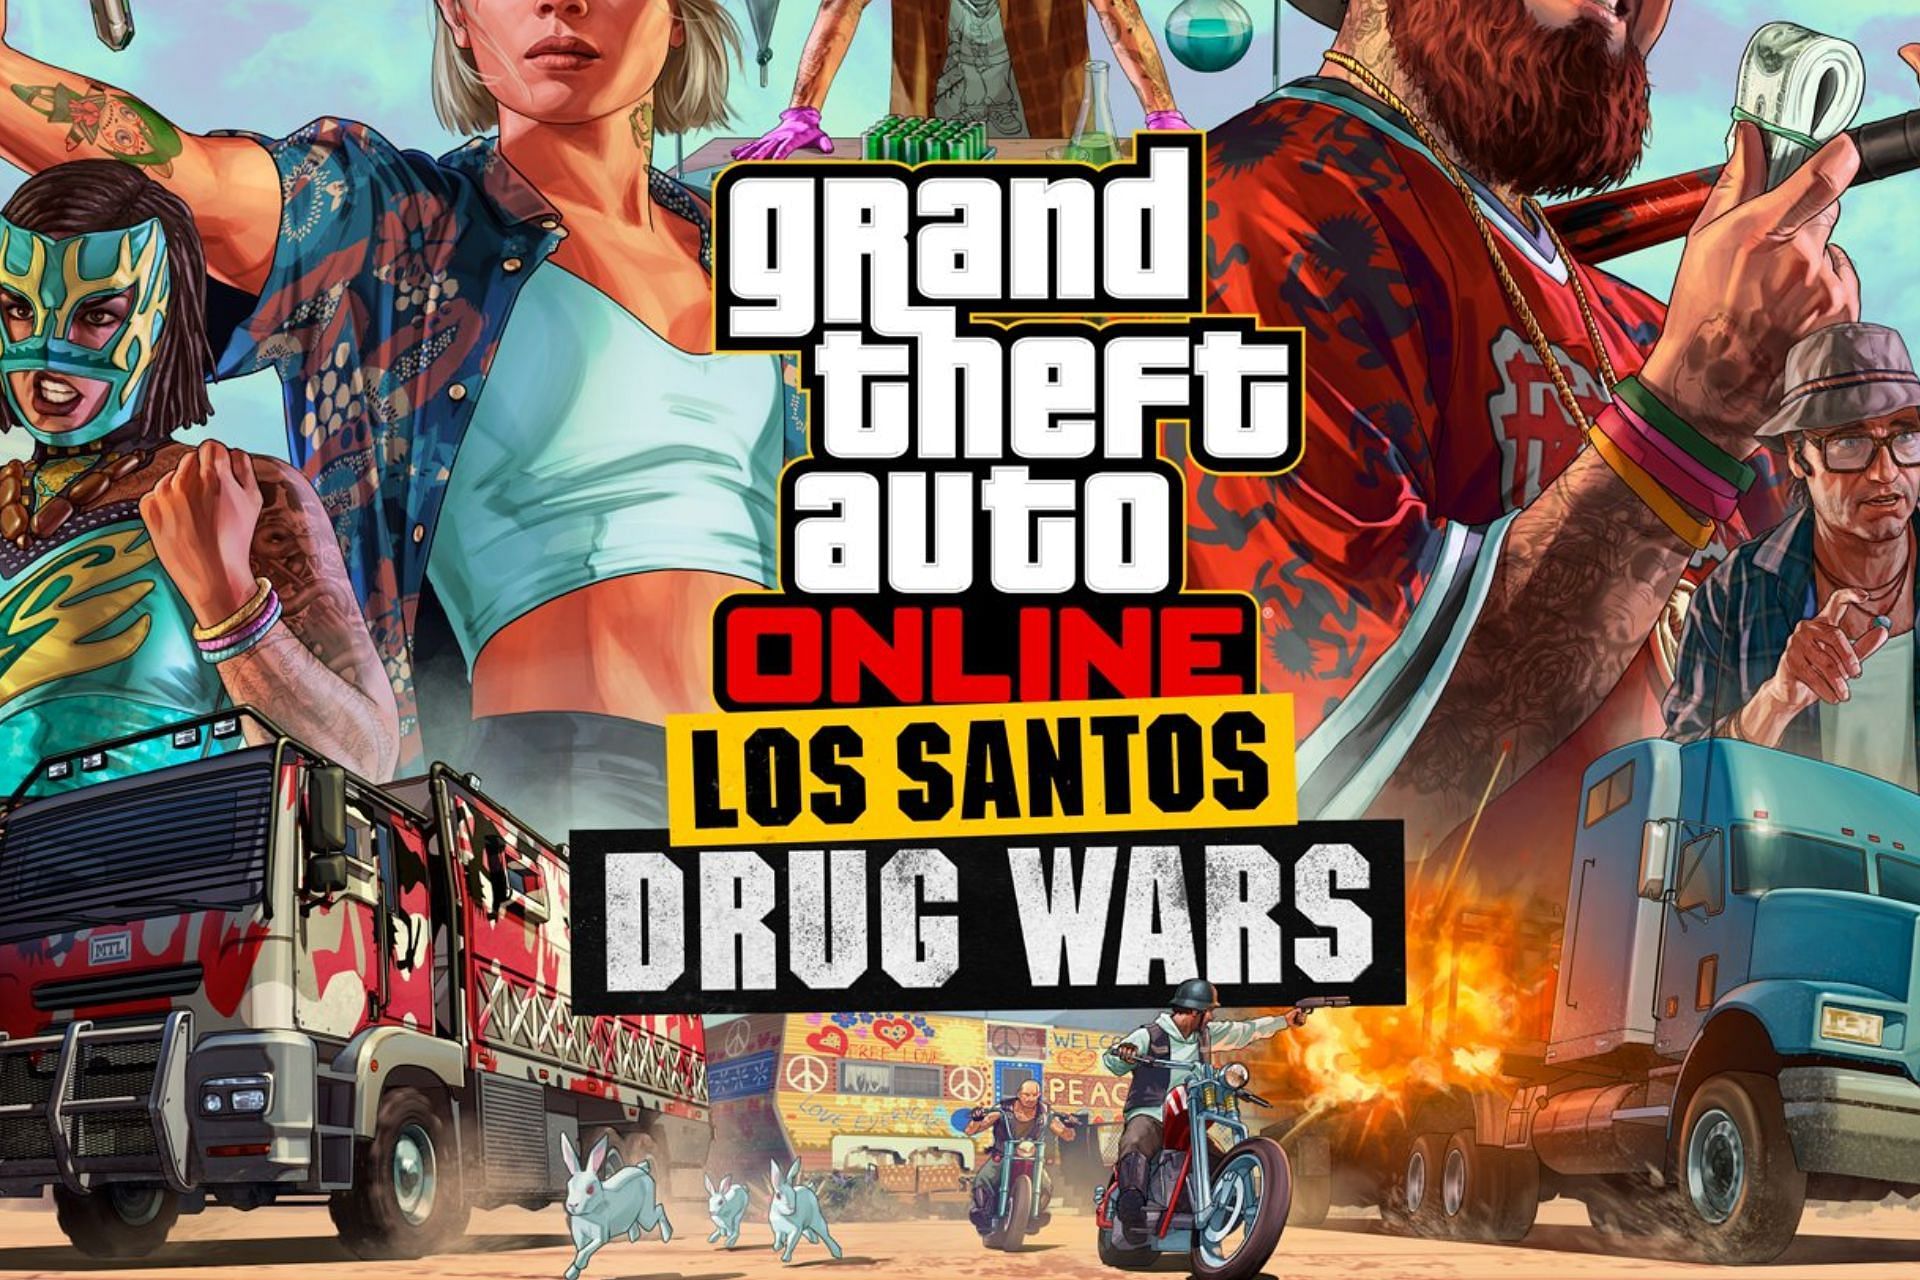 Data leakers discovered an Easter egg ahead of the GTA Online Los Santon Drug Wars DLC. (Image via Rockstar Games)